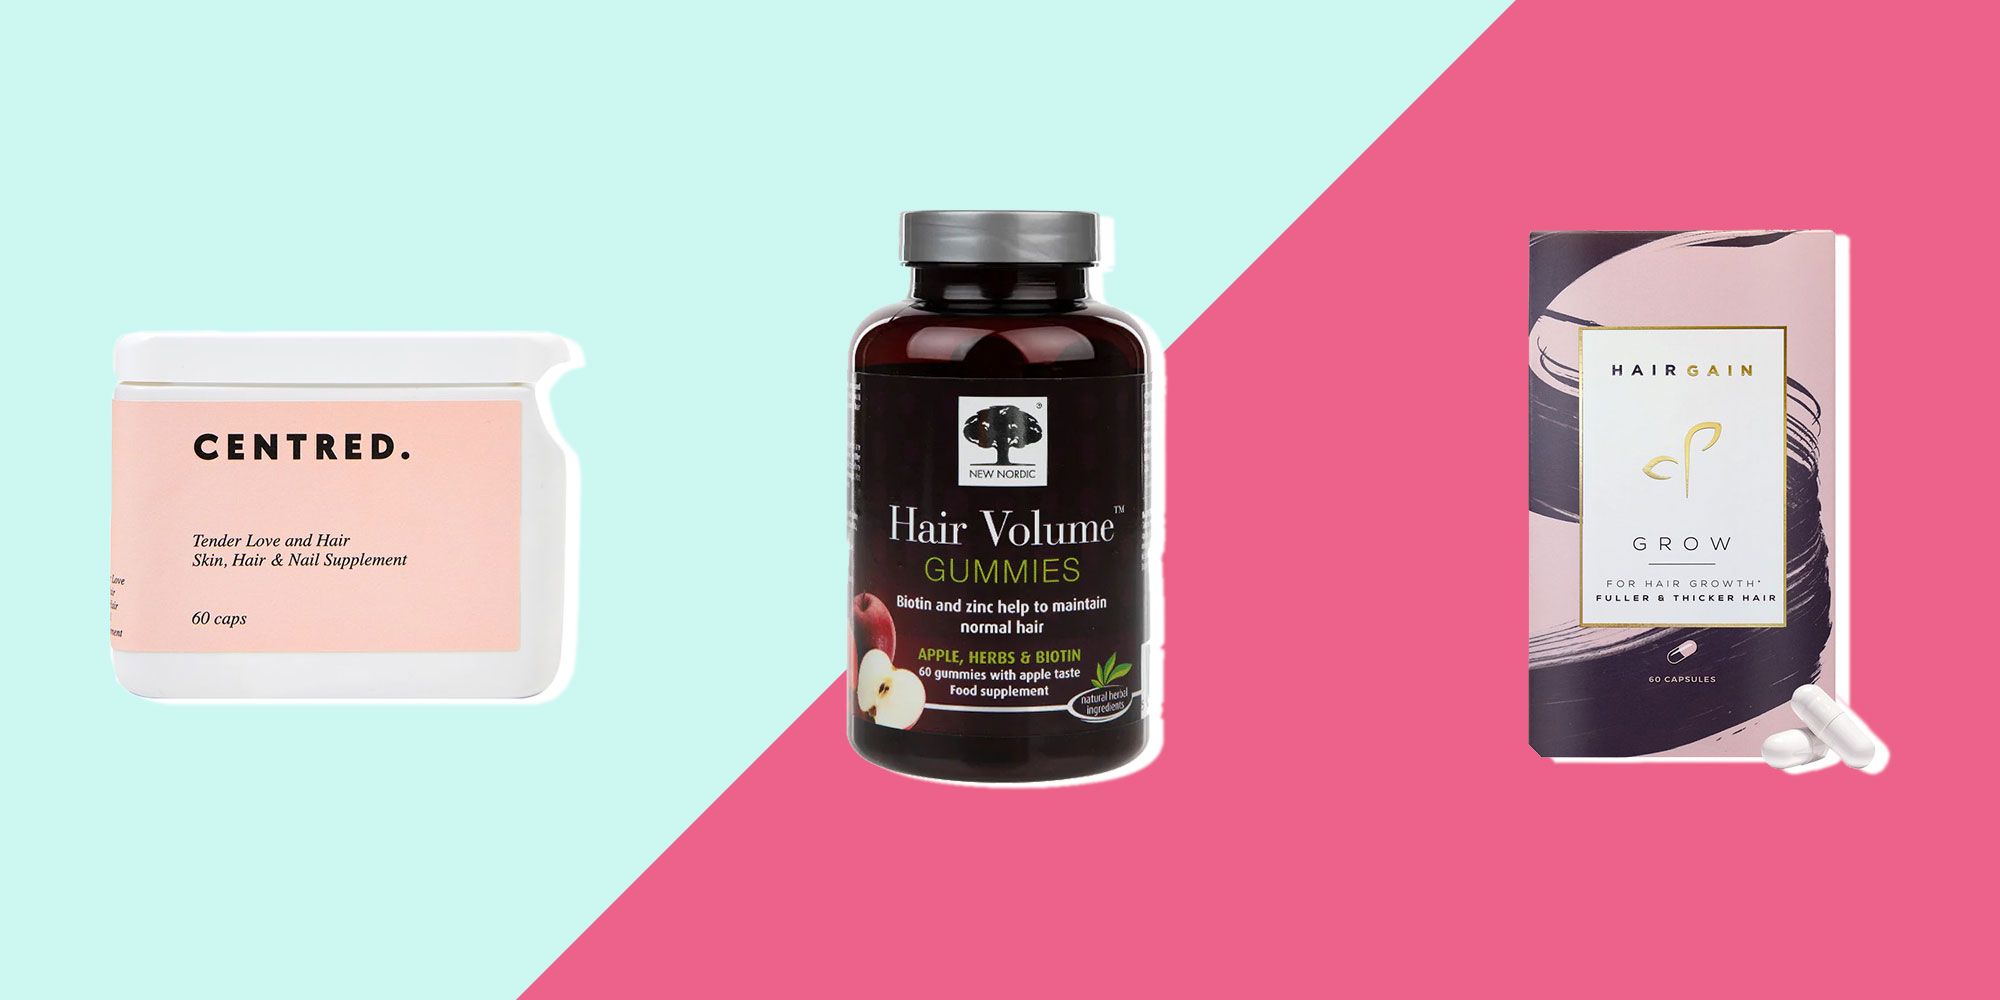 Hair Vitamins for Women 35+ – Hairburst